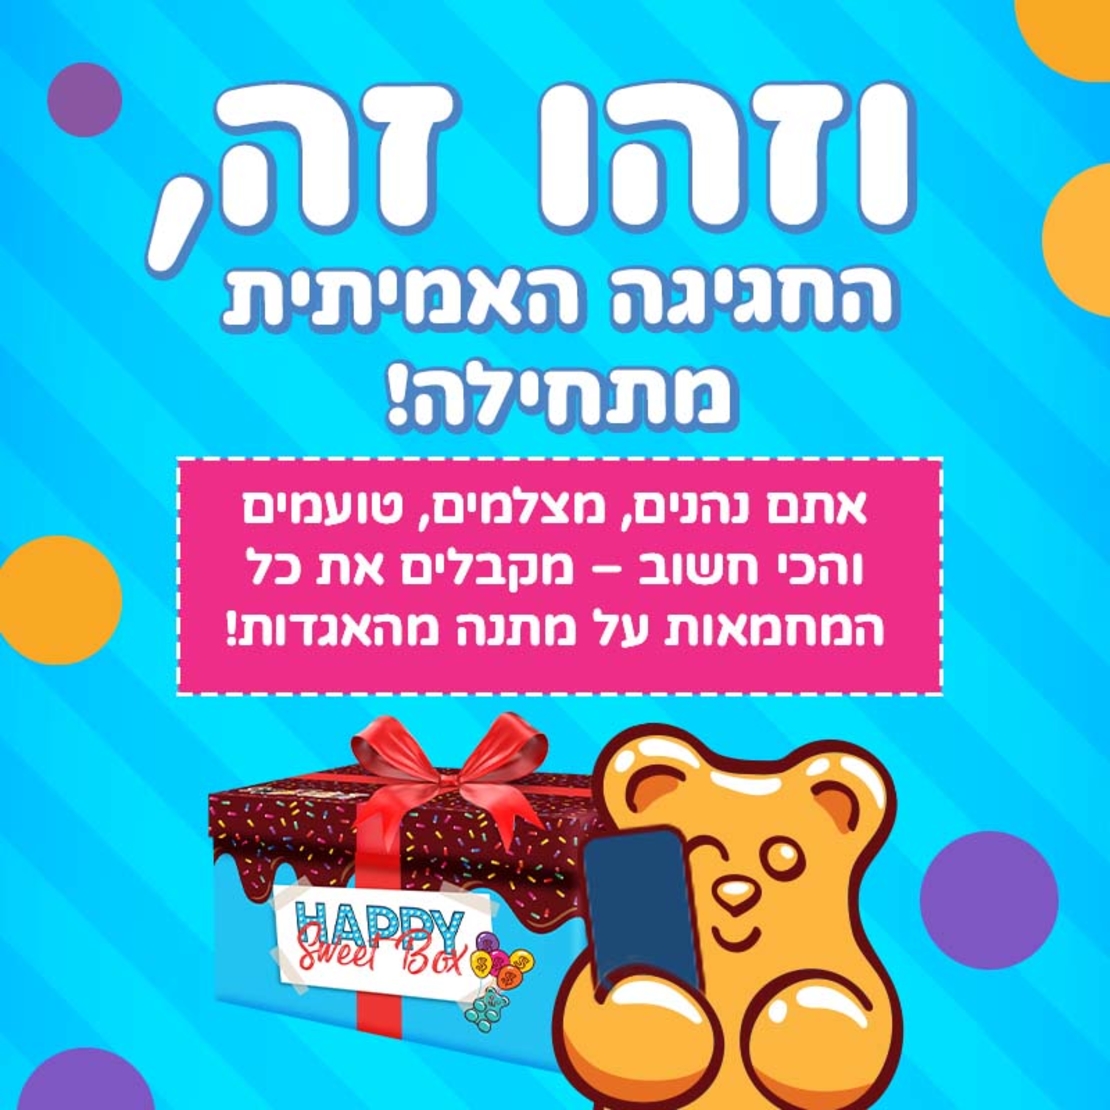 Happy sweetbox - מתנה ליום הולדת ולכל חגיגה! (L)